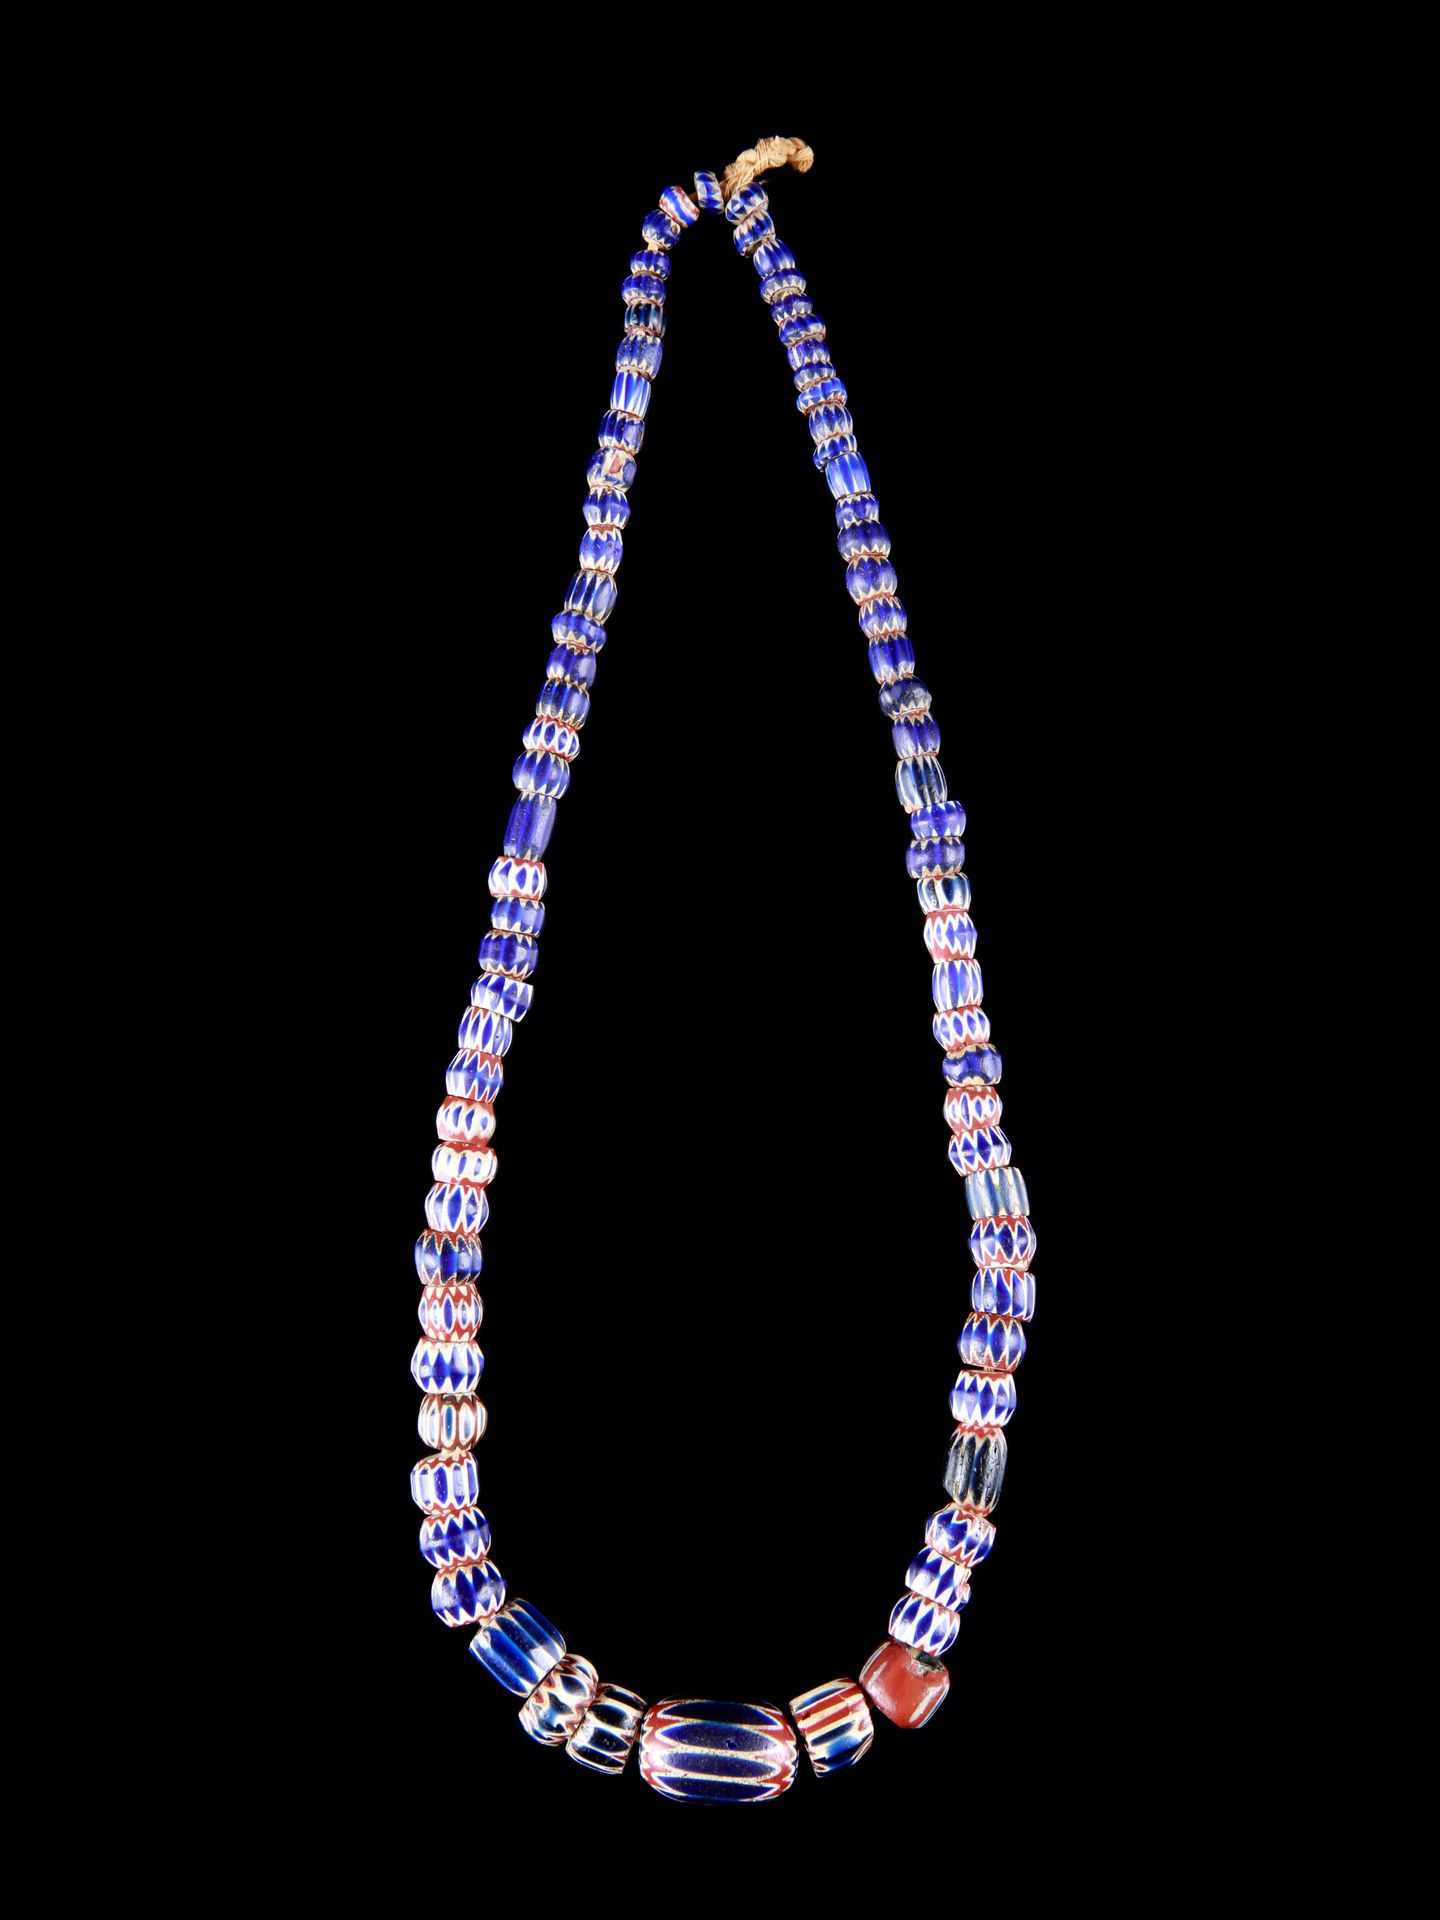 An Italian Chevron Beads Necklace Collier, perles en chevron

Italie / Afrique d&hellip;